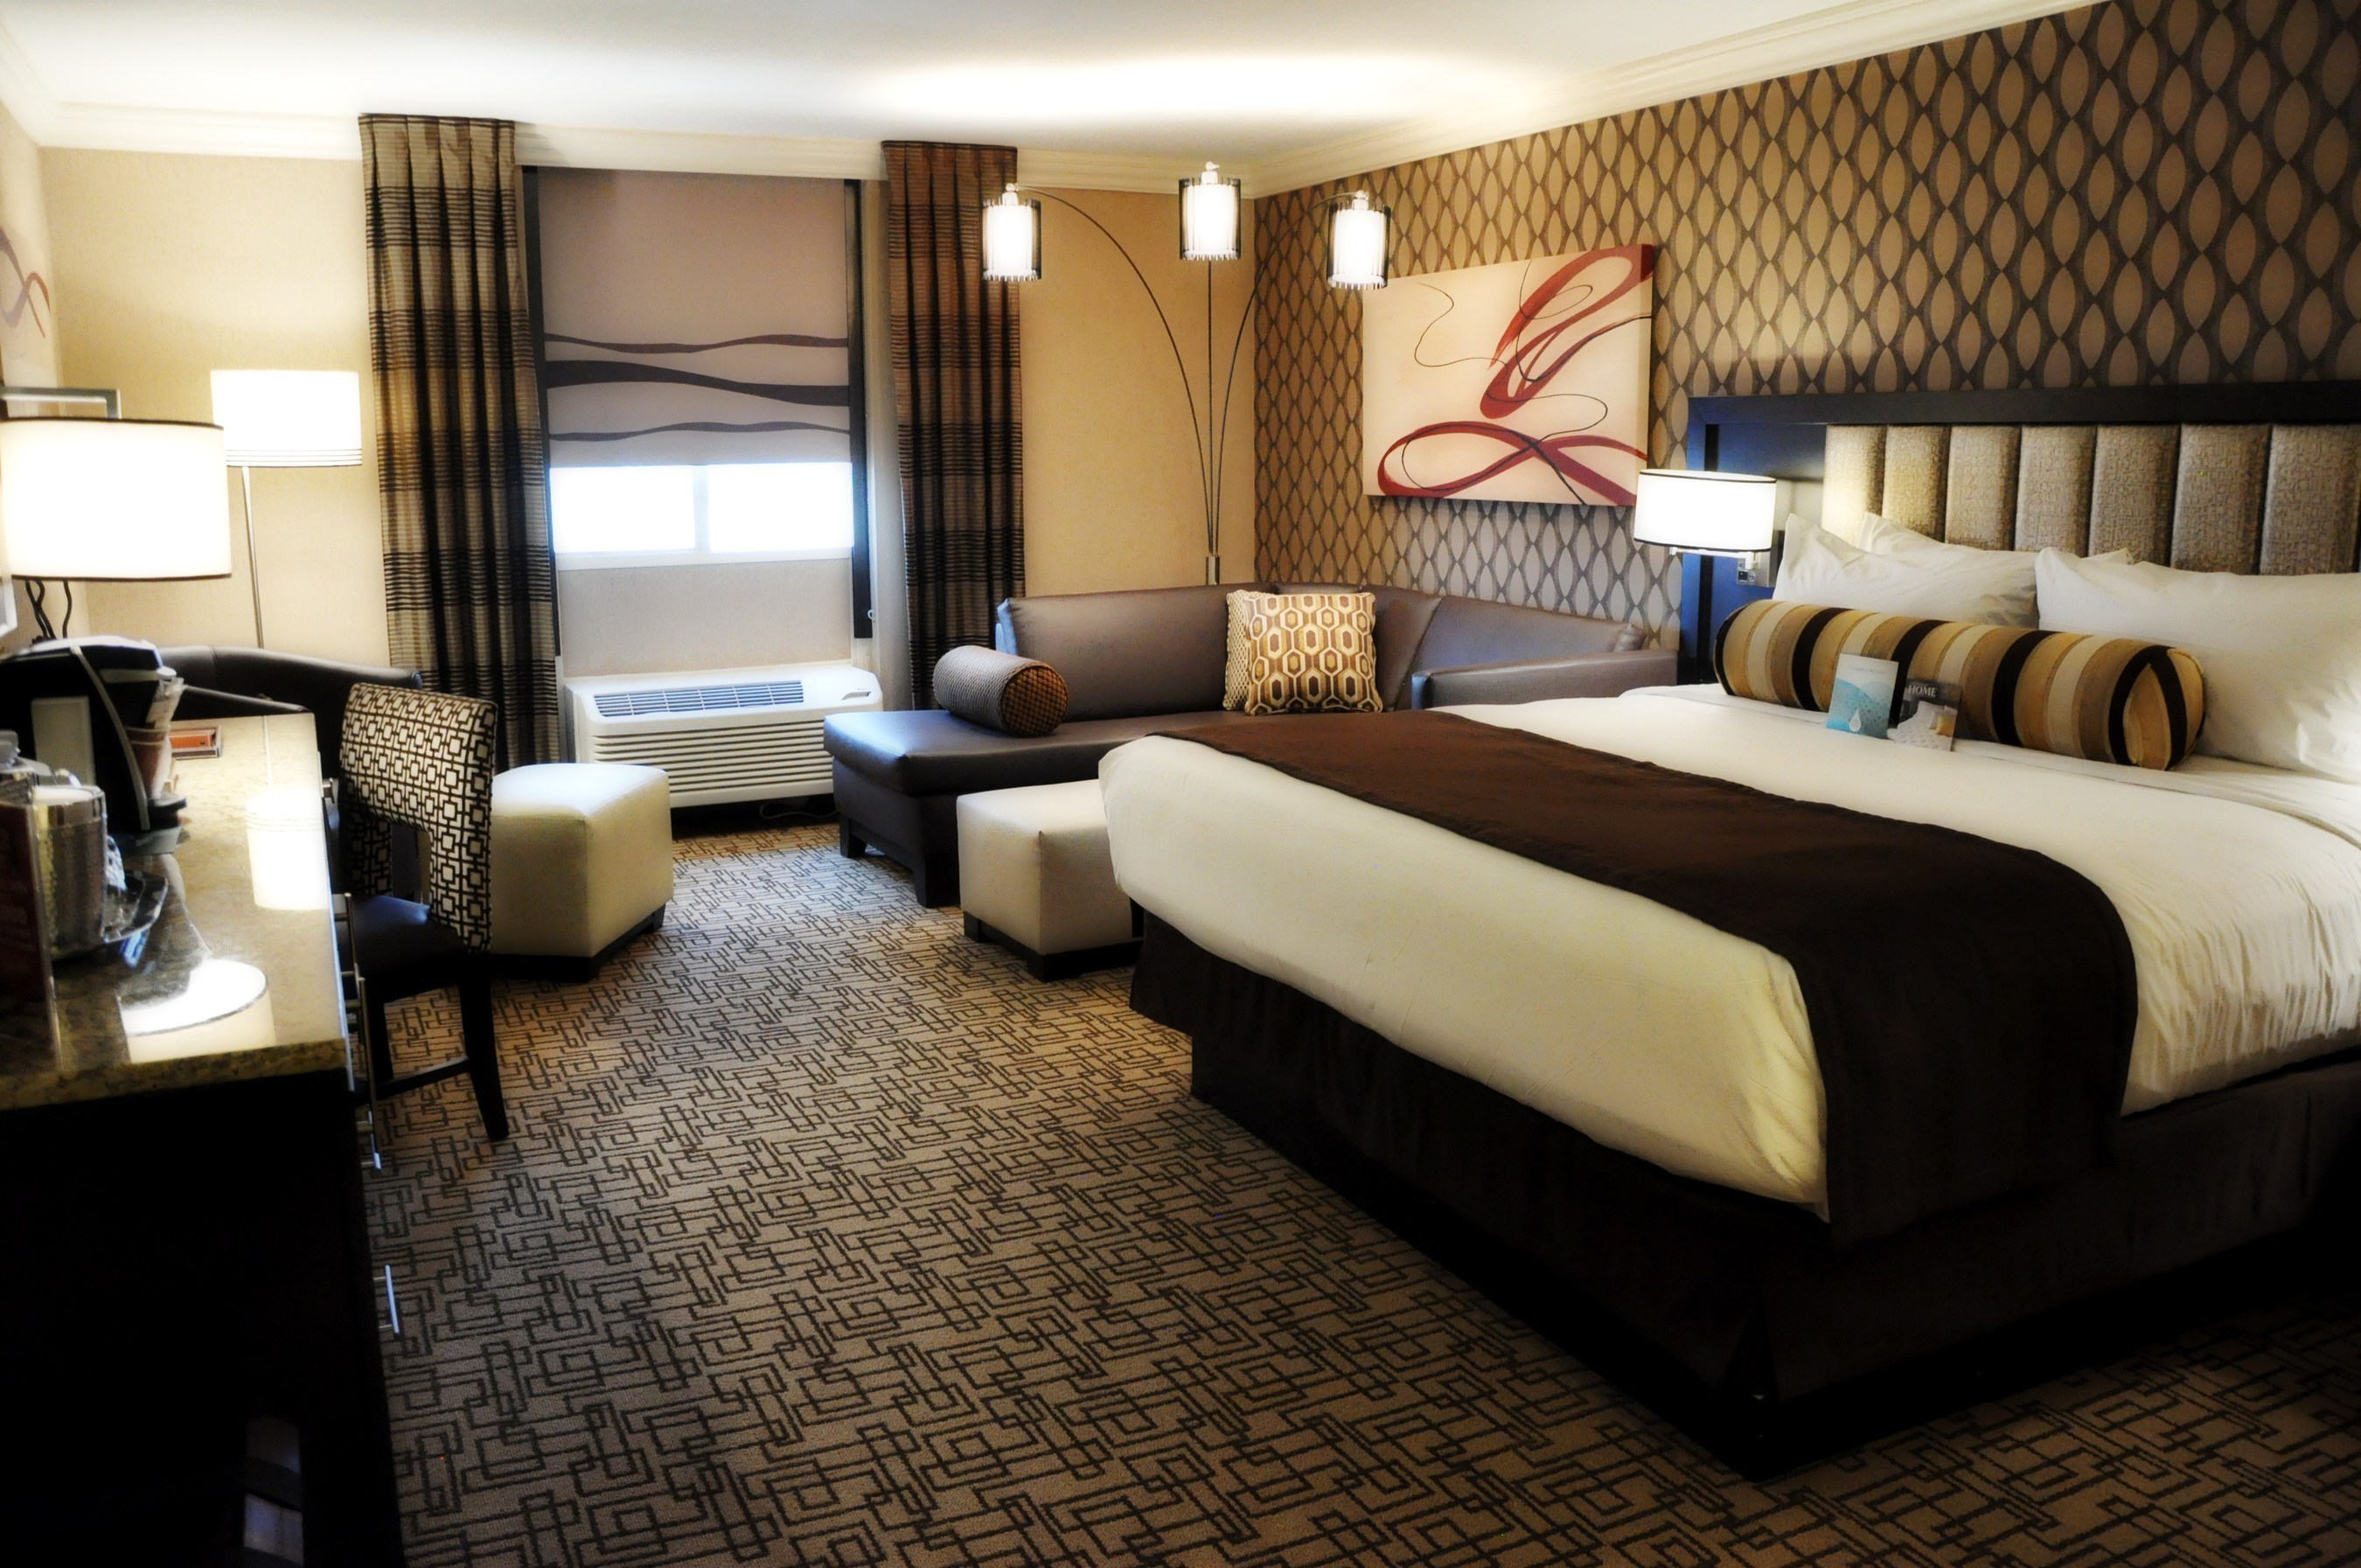 Golden Nugget Las Vegas Rooms